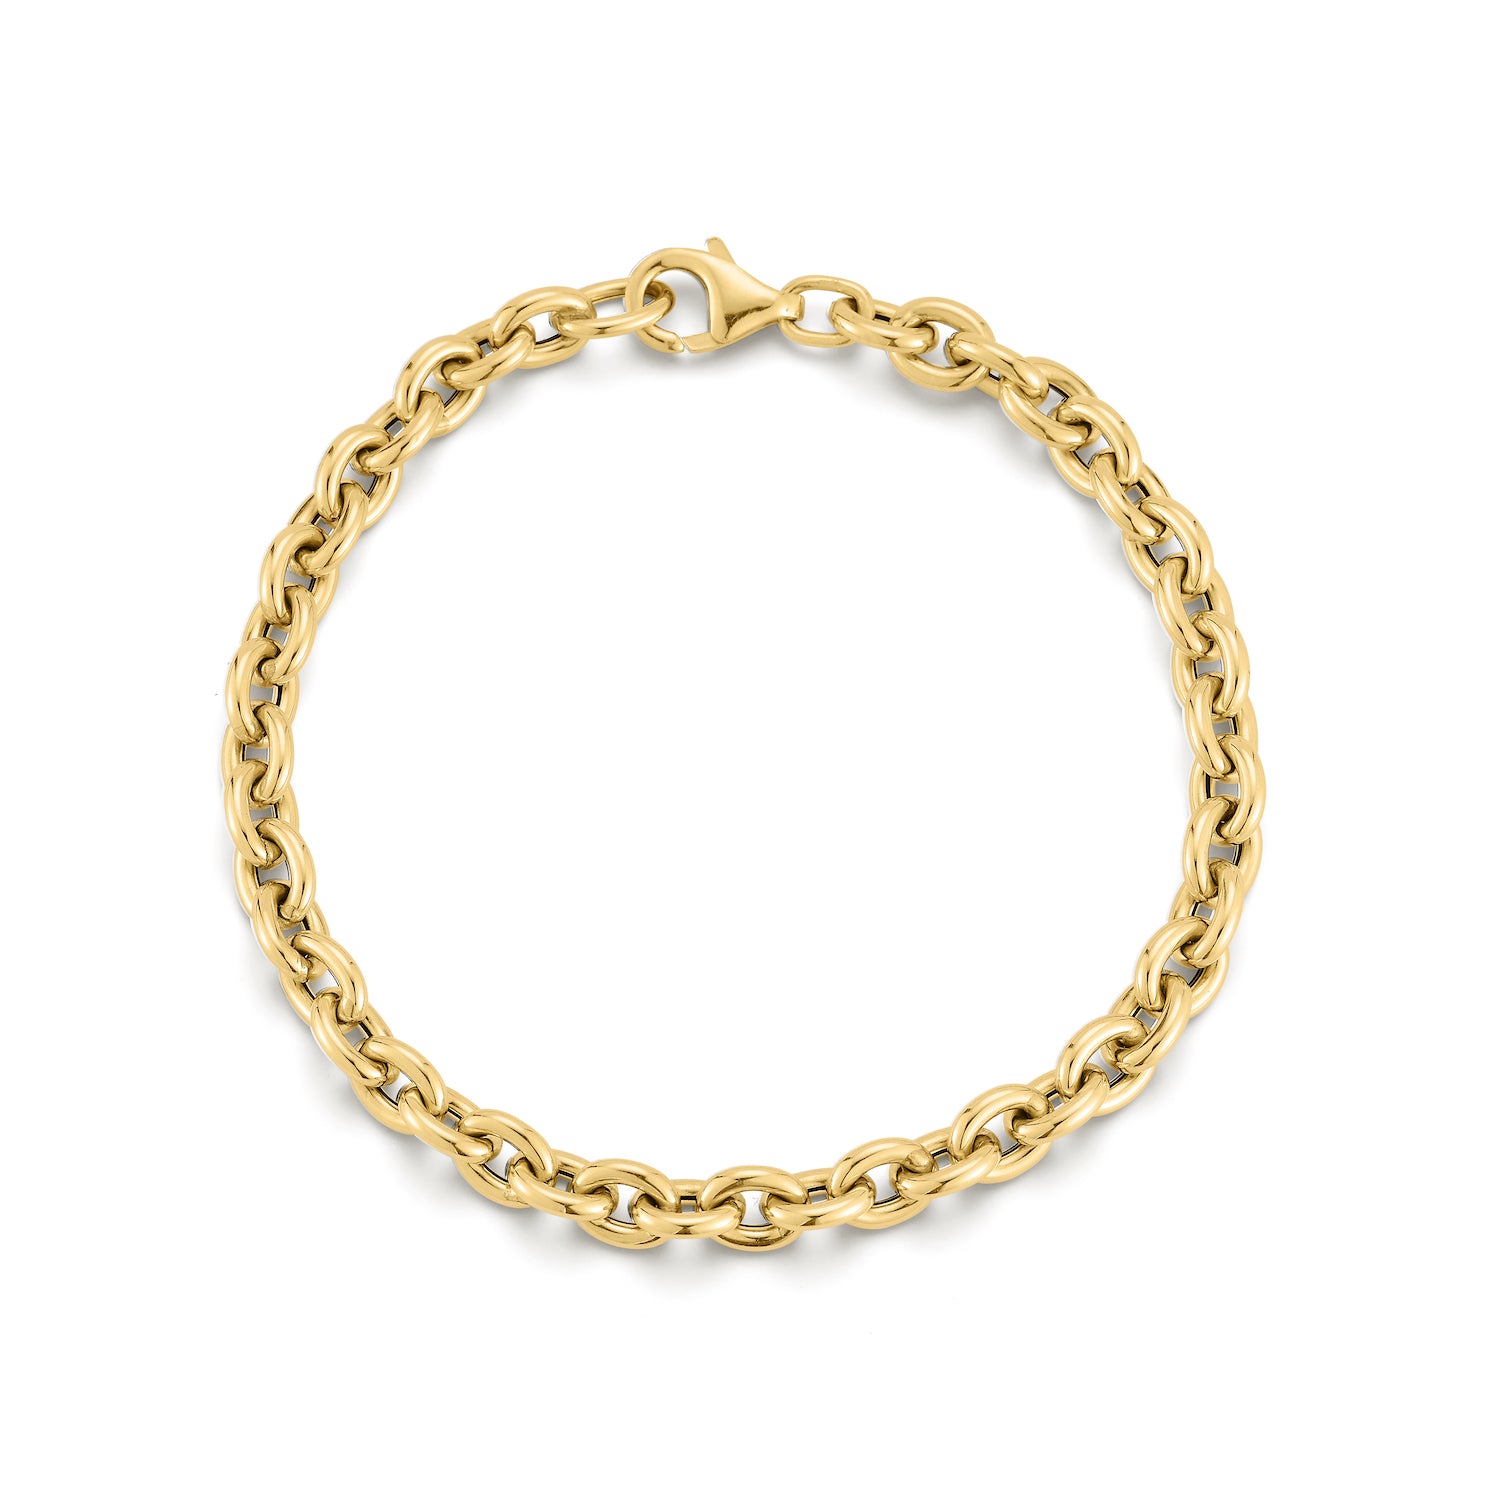 Sienna Chain Bracelet in 14k yellow gold